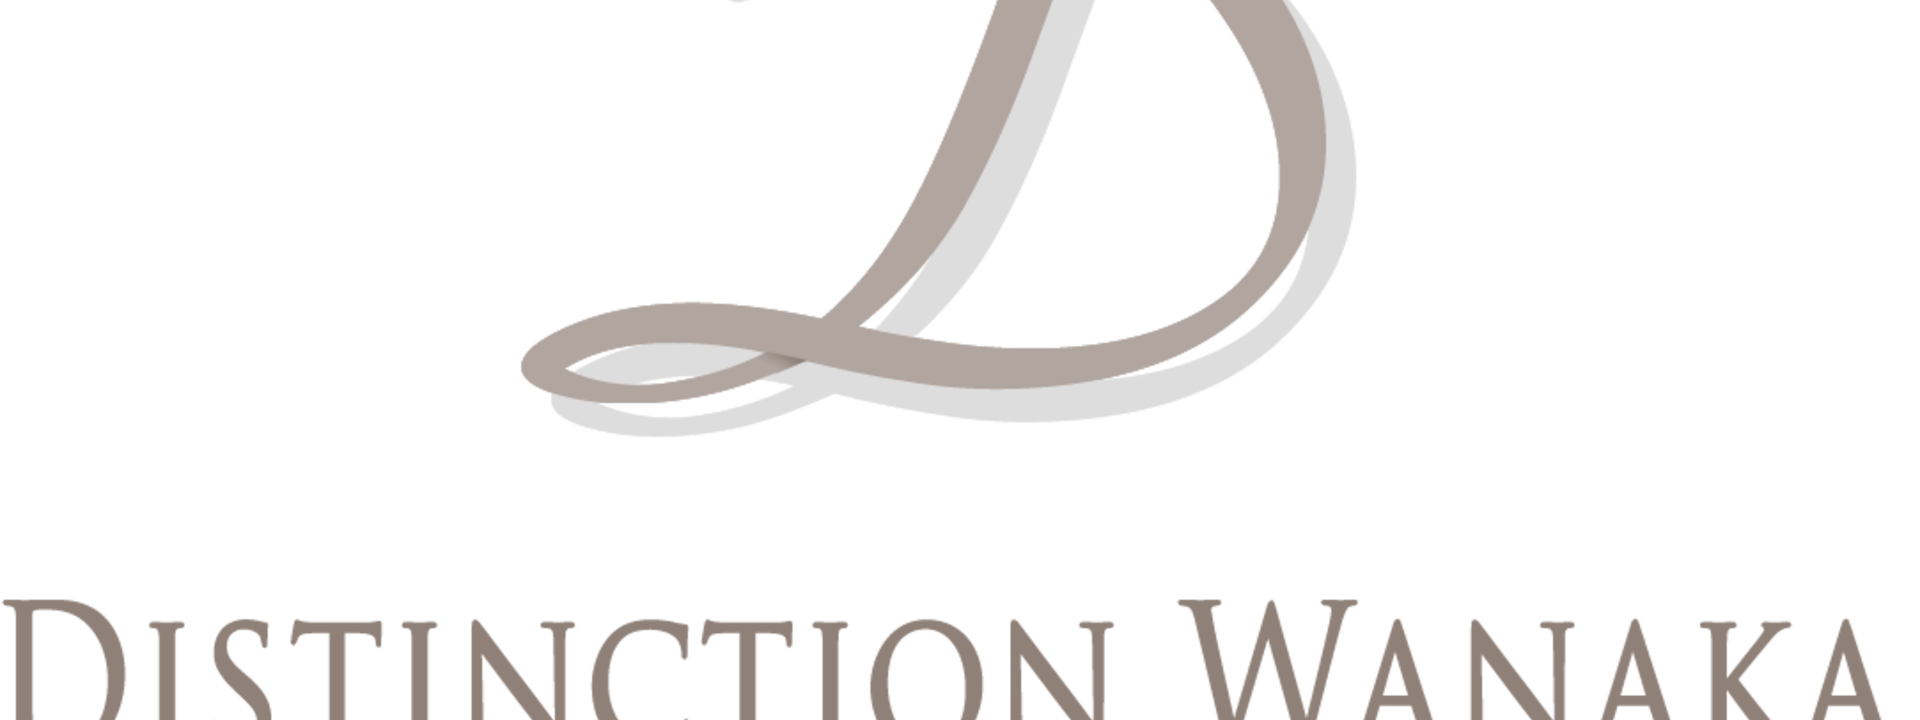 distinction-wanaka-logo-colour-alpine.png